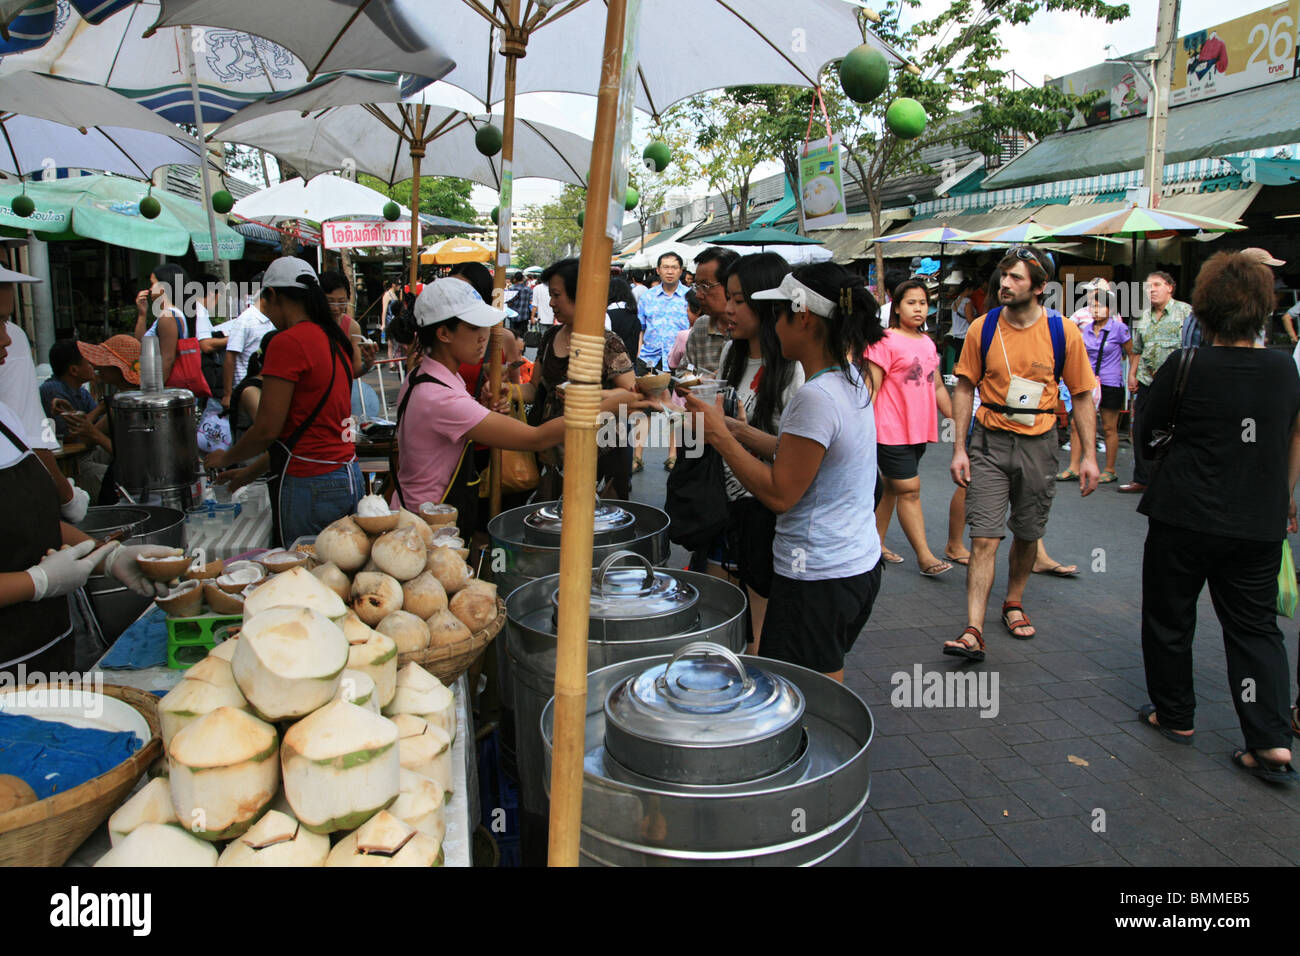 Kokosnuss-Eis-stand auf Wochenendmarkt Chatuchak, Bangkok Stockfoto